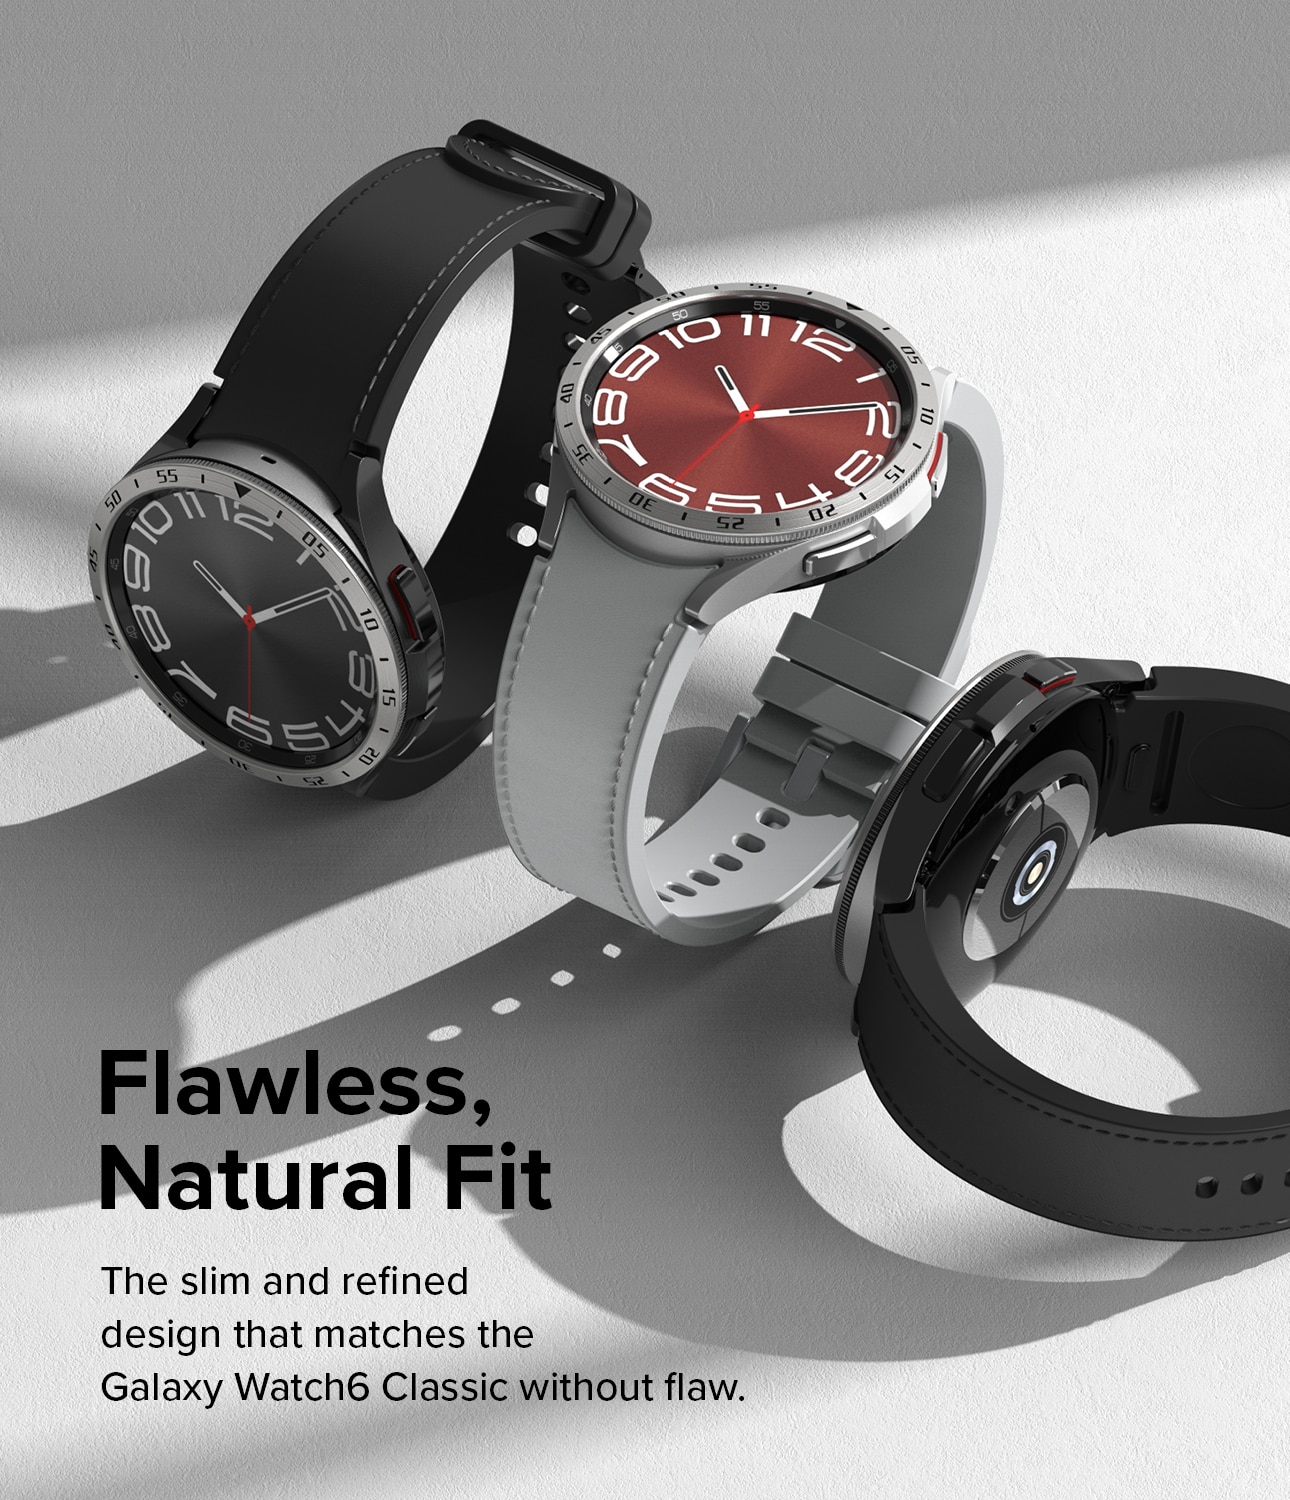 Samsung Galaxy Watch 6 Classic 47mm  Bezel Styling Silver